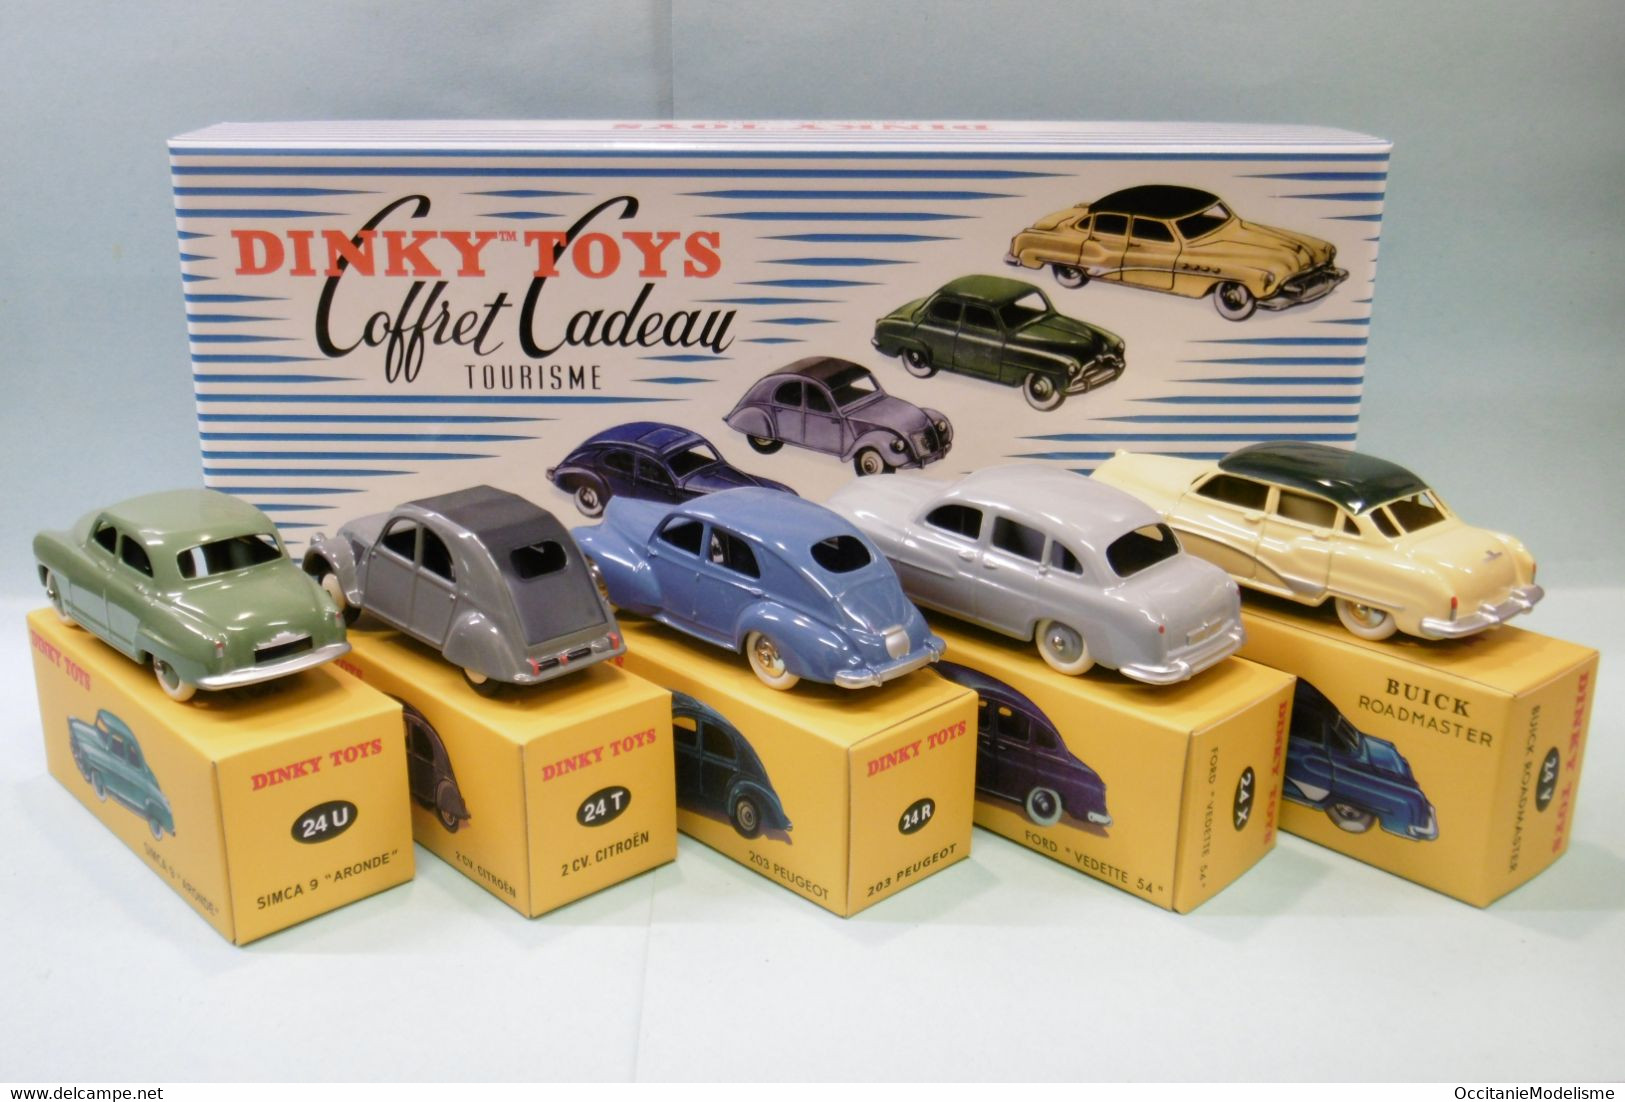 Dinky Toys / Atlas - COFFRET CADEAU Tourisme N°24 Ford + Peugeot + Citroën + Simca + Buick Neuf 1/43 - Dinky